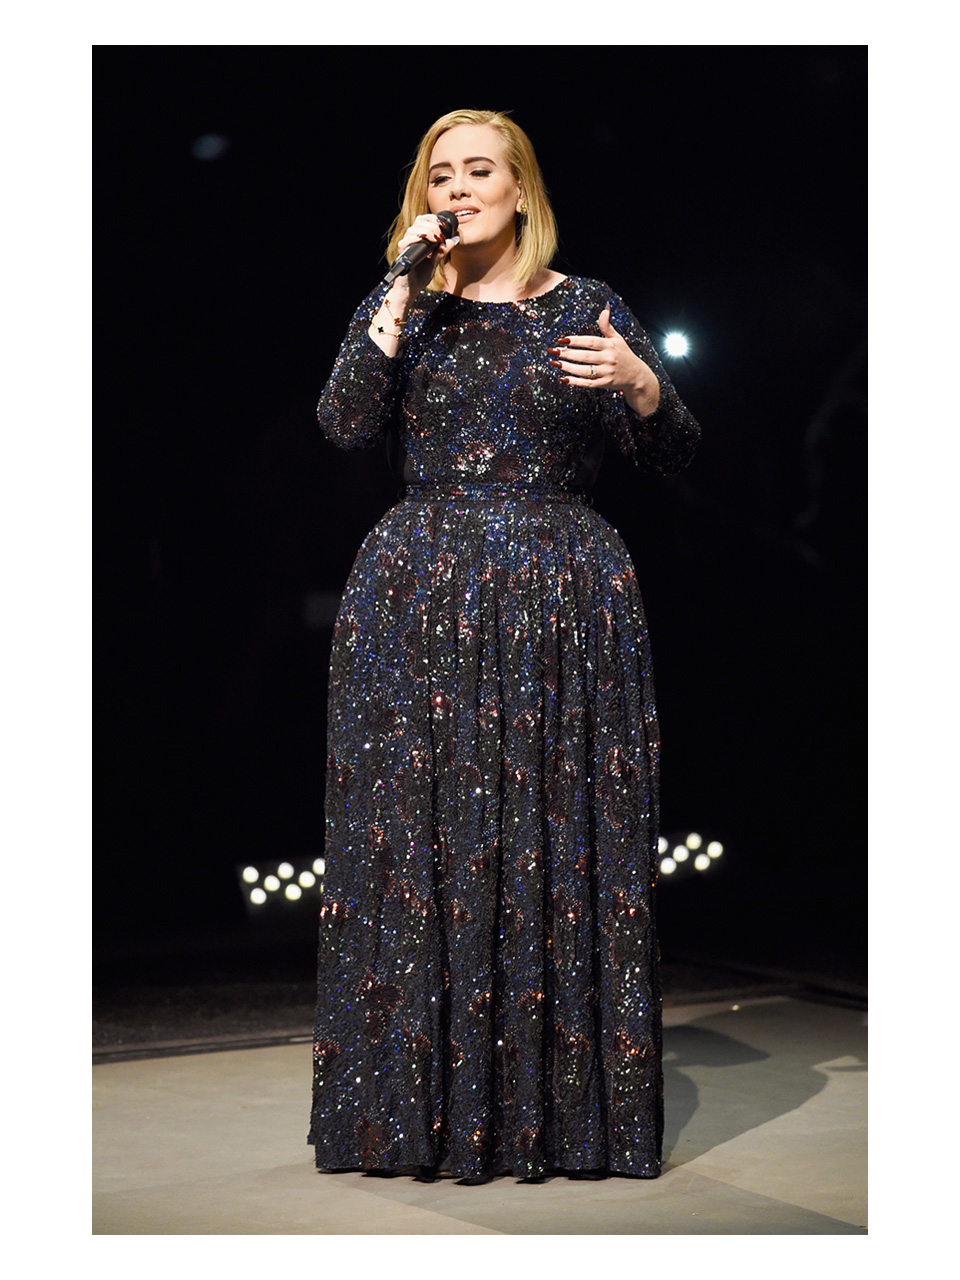 Britanska pjevačica Adele tijekom koncerta.